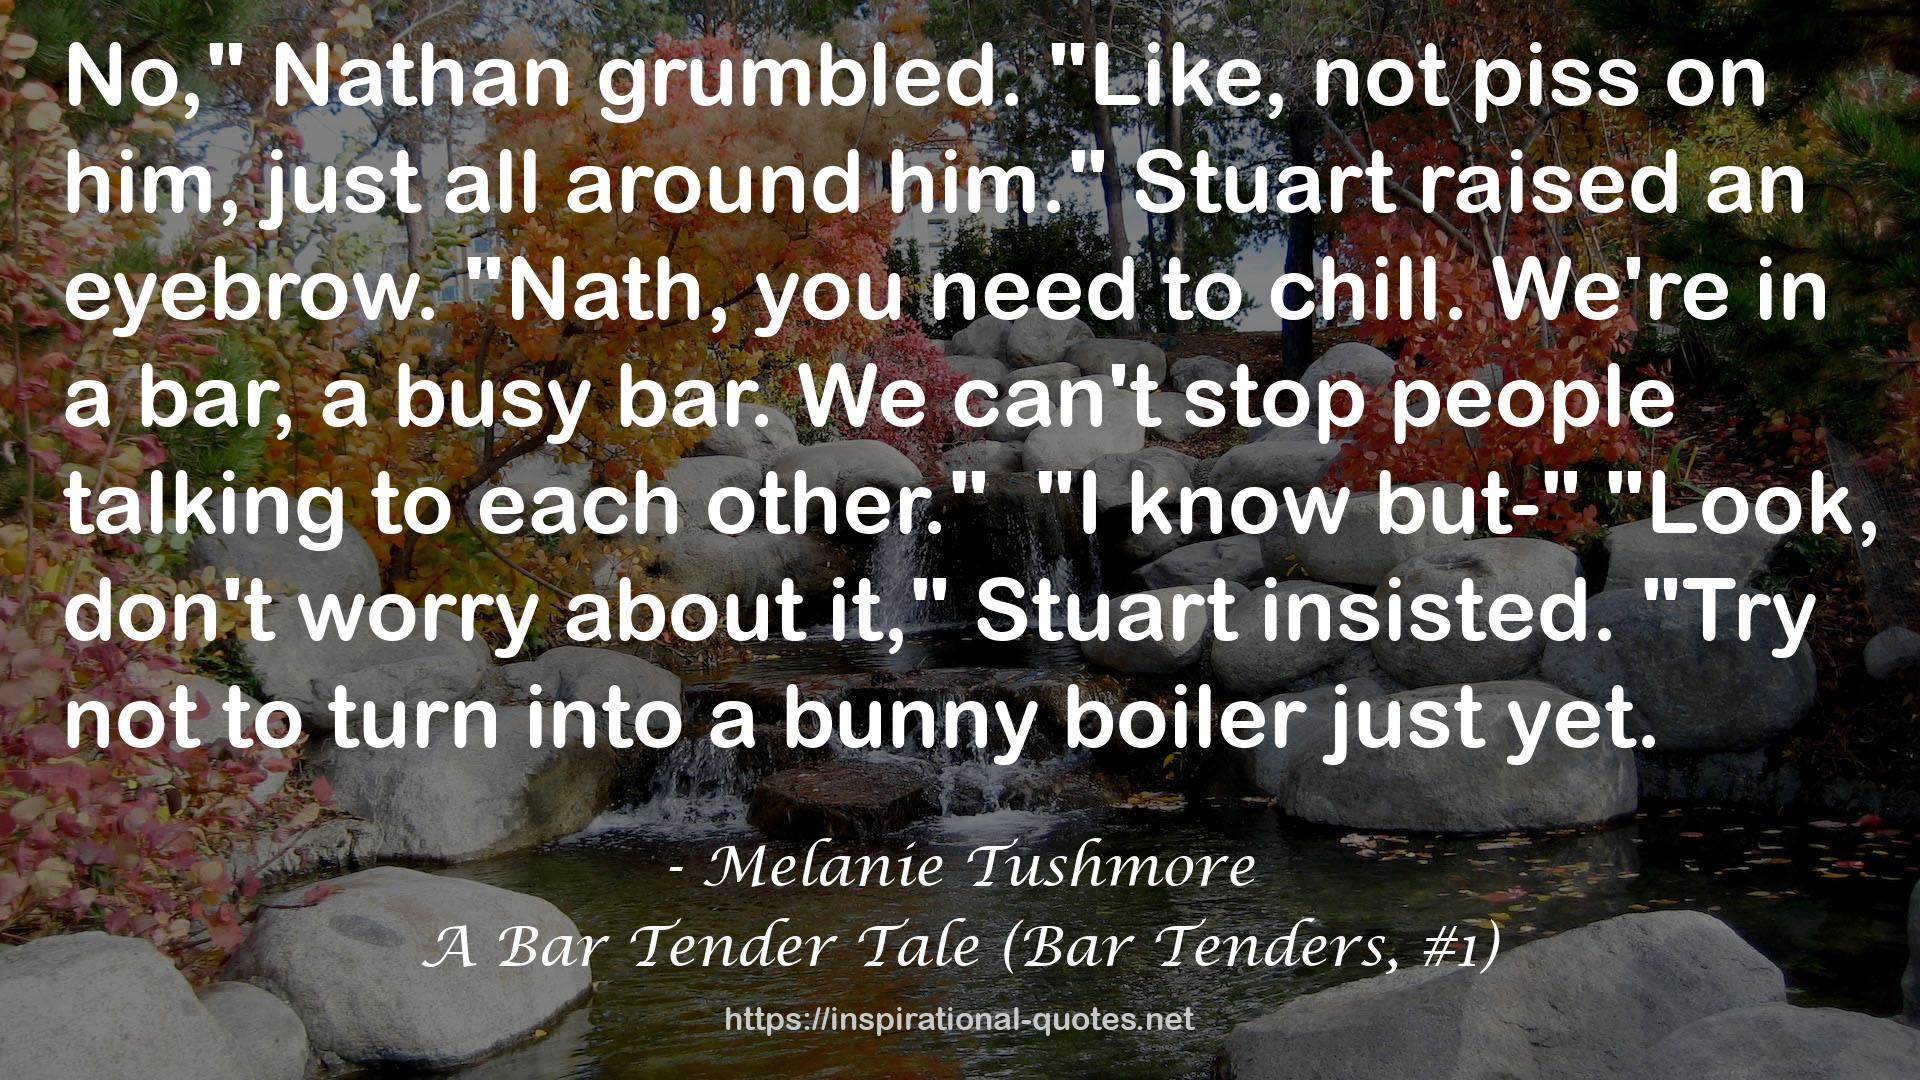 A Bar Tender Tale (Bar Tenders, #1) QUOTES